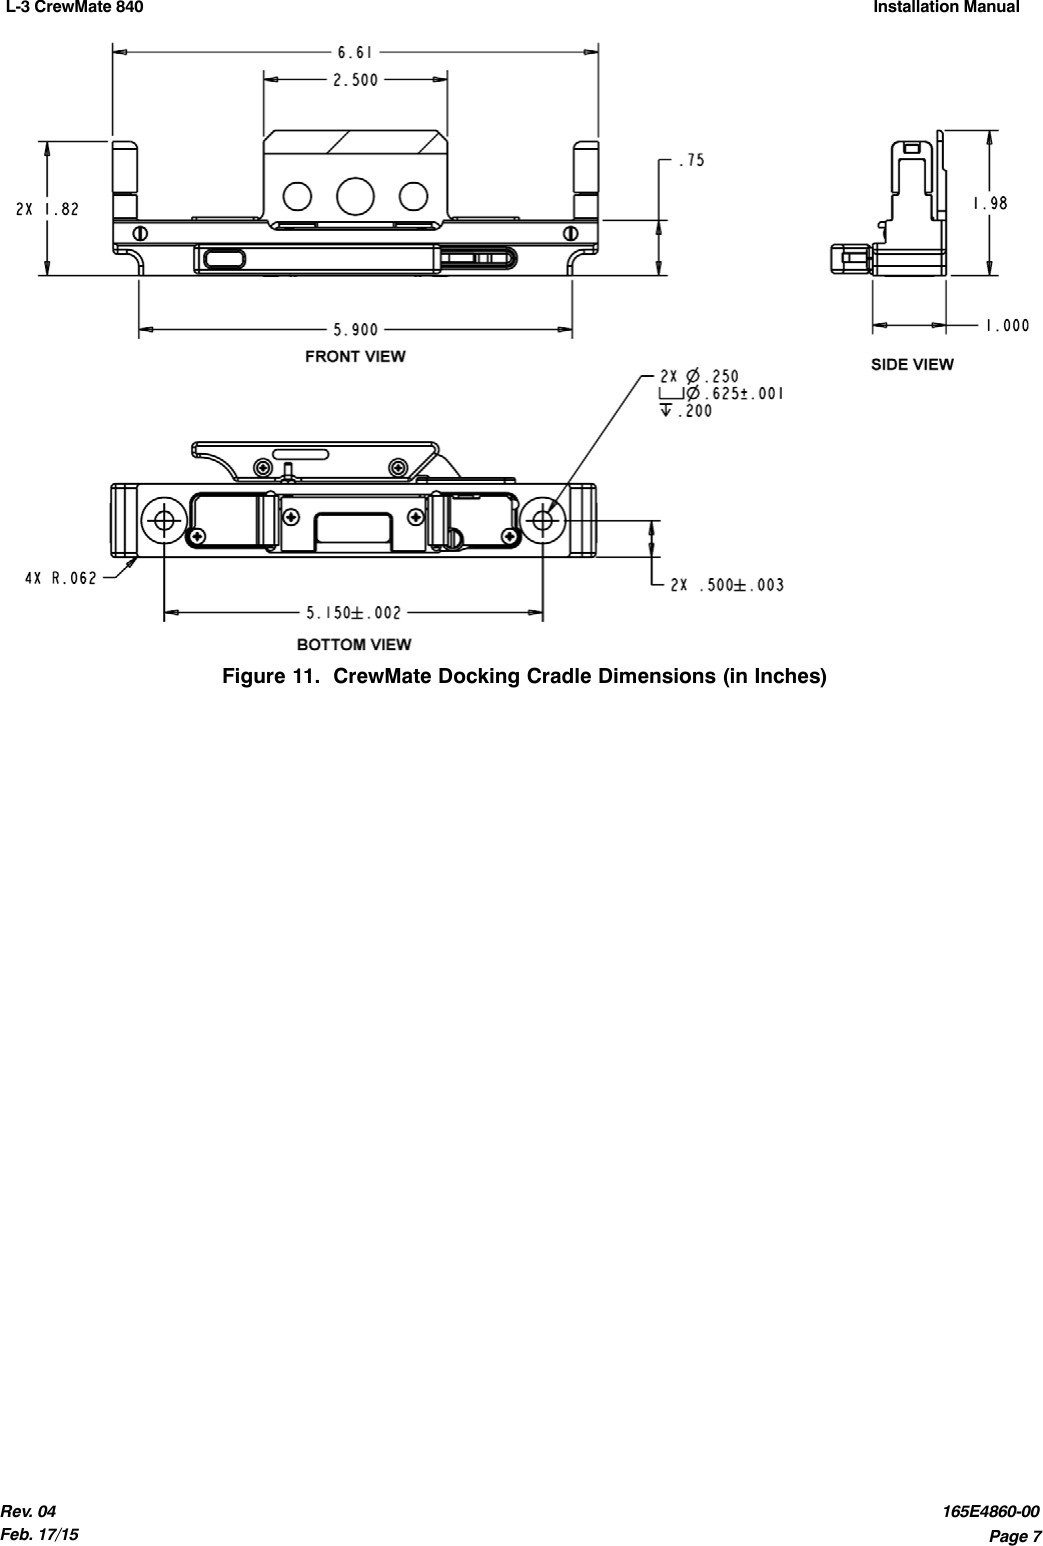 L-3 CrewMate 840 Installation Manual Page 7Rev. 04Feb. 17/15165E4860-00Figure 11.  CrewMate Docking Cradle Dimensions (in Inches)